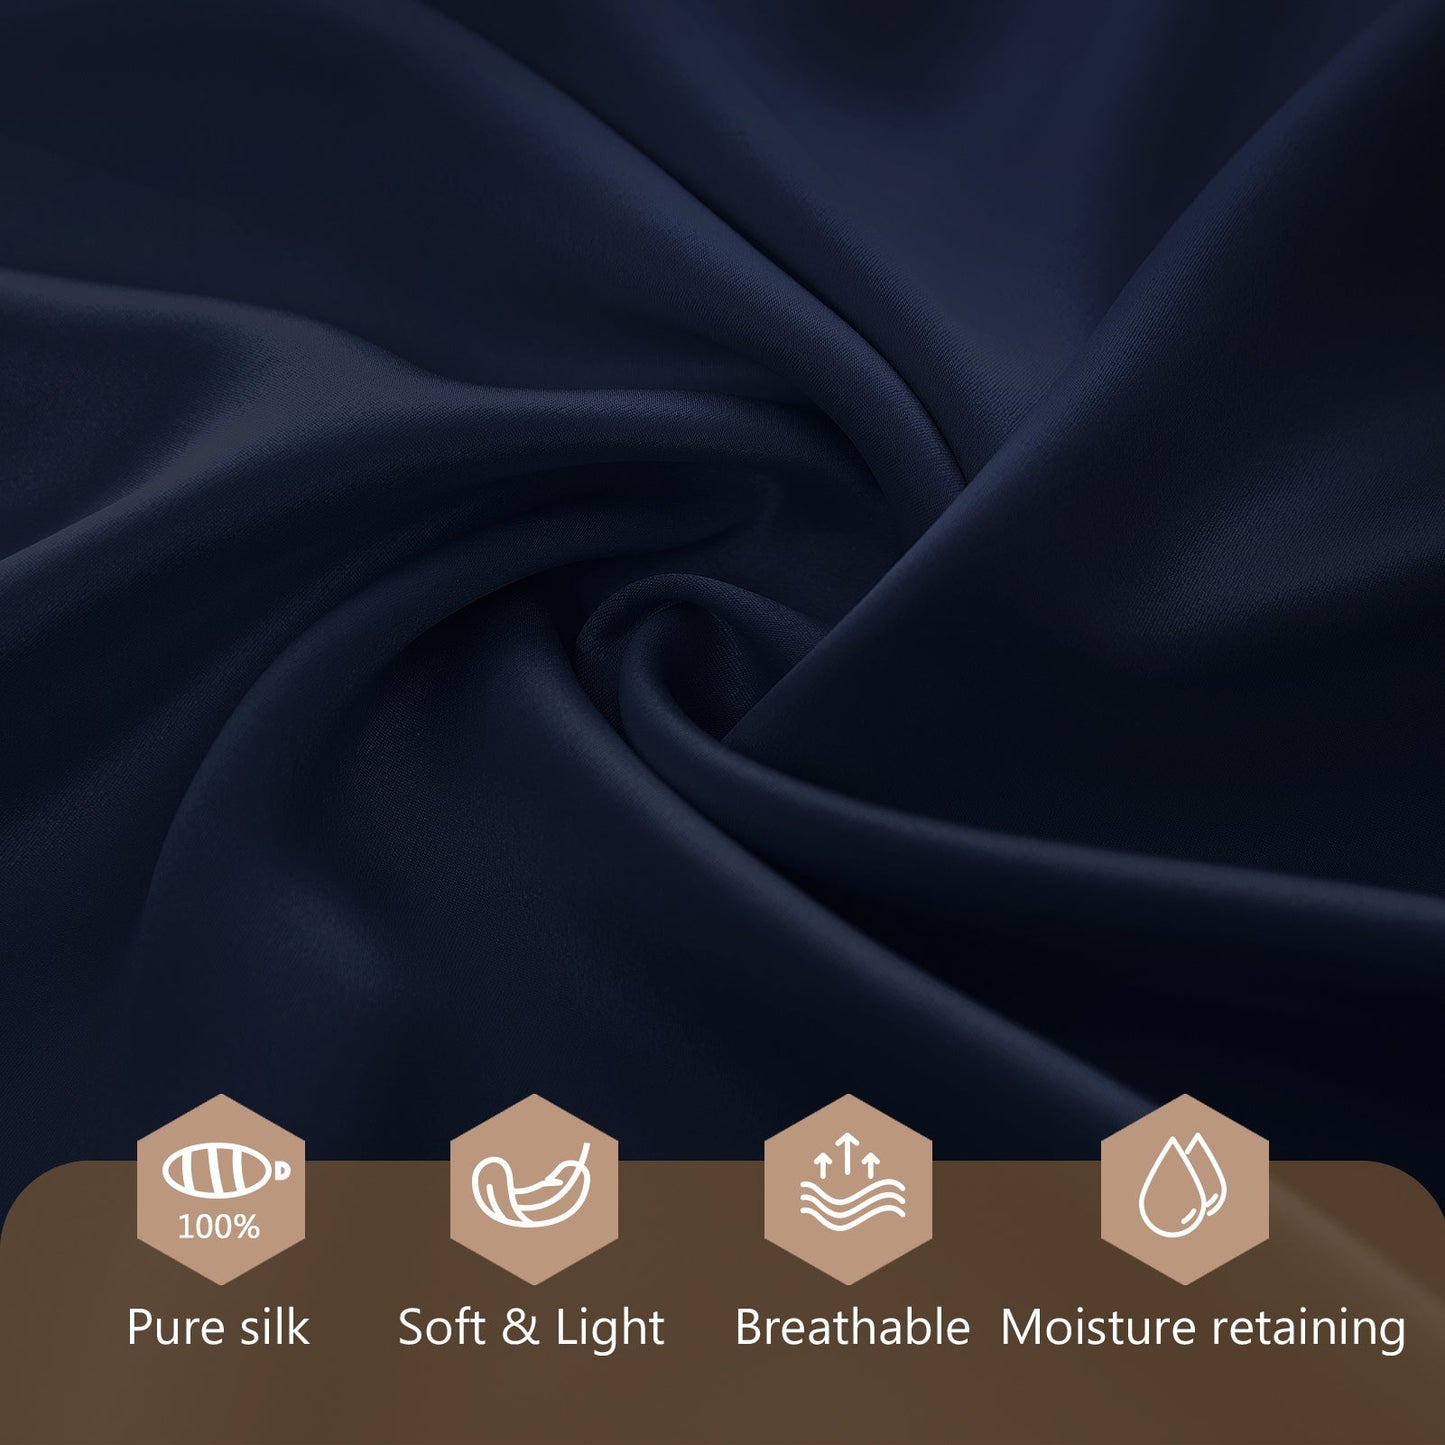 GRALACE Pure Silk Pillowcase  22Momme